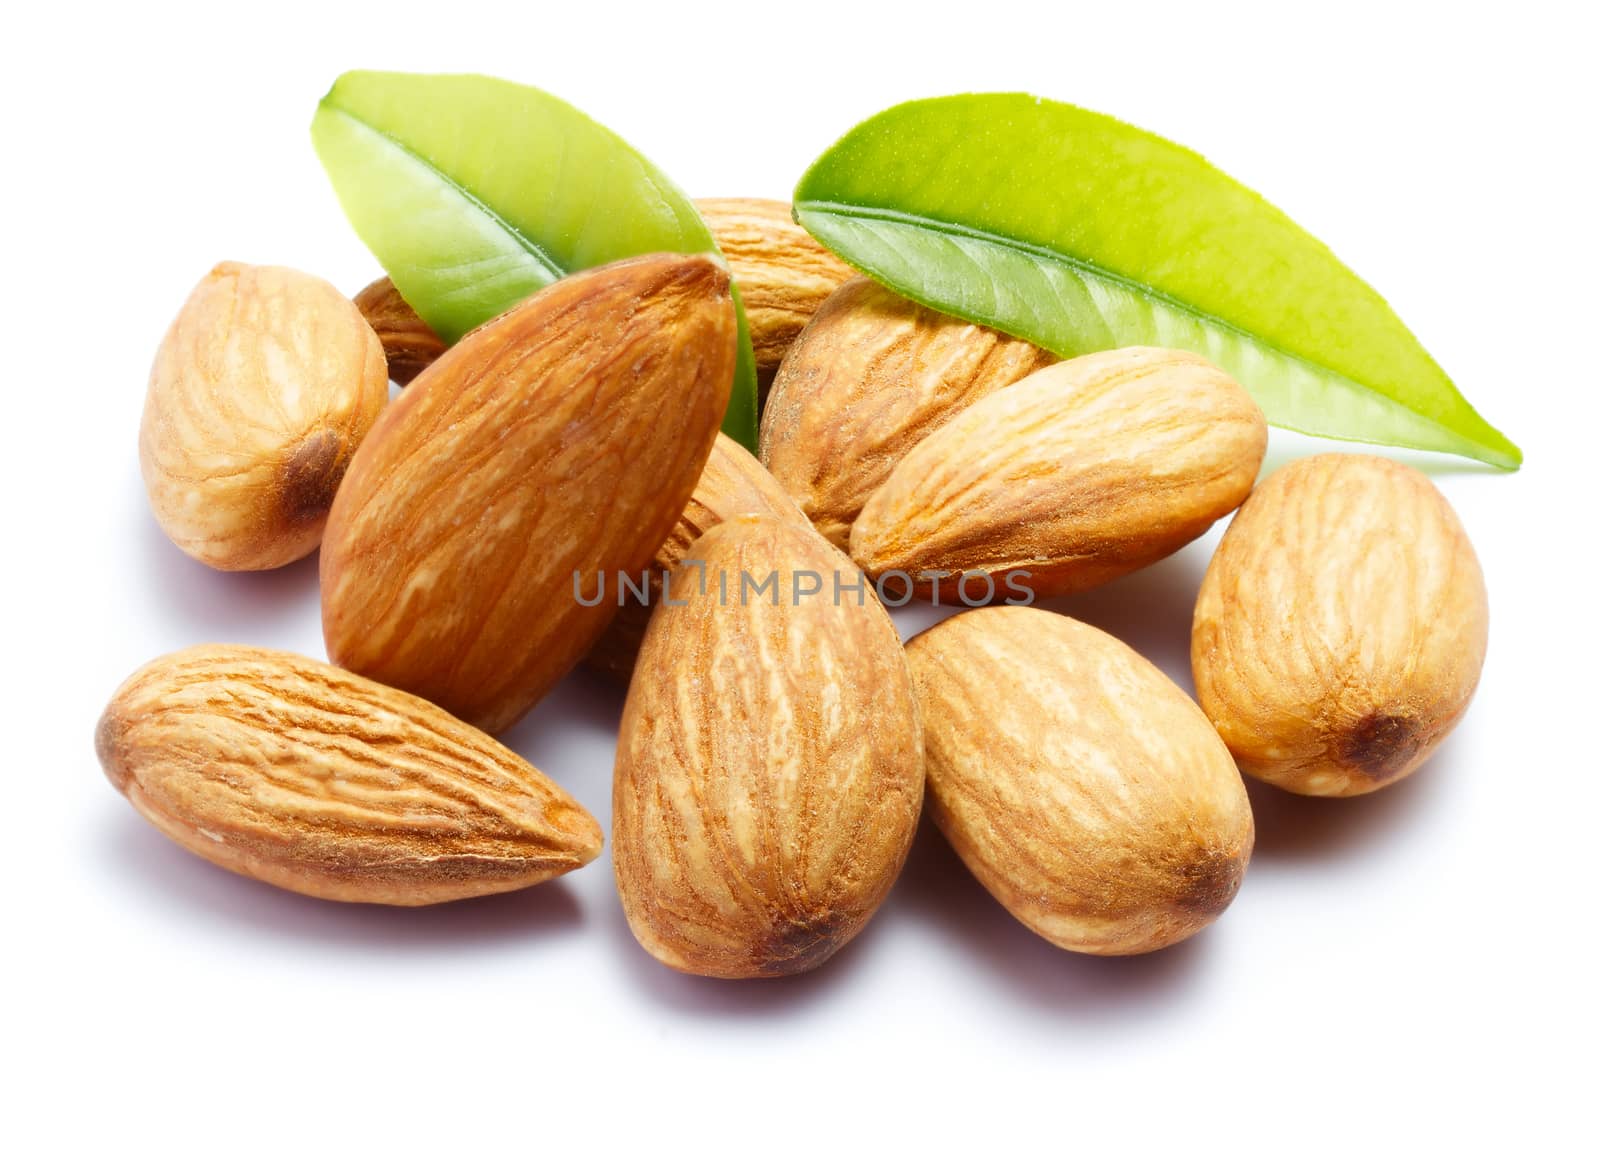 Almonds by Valengilda